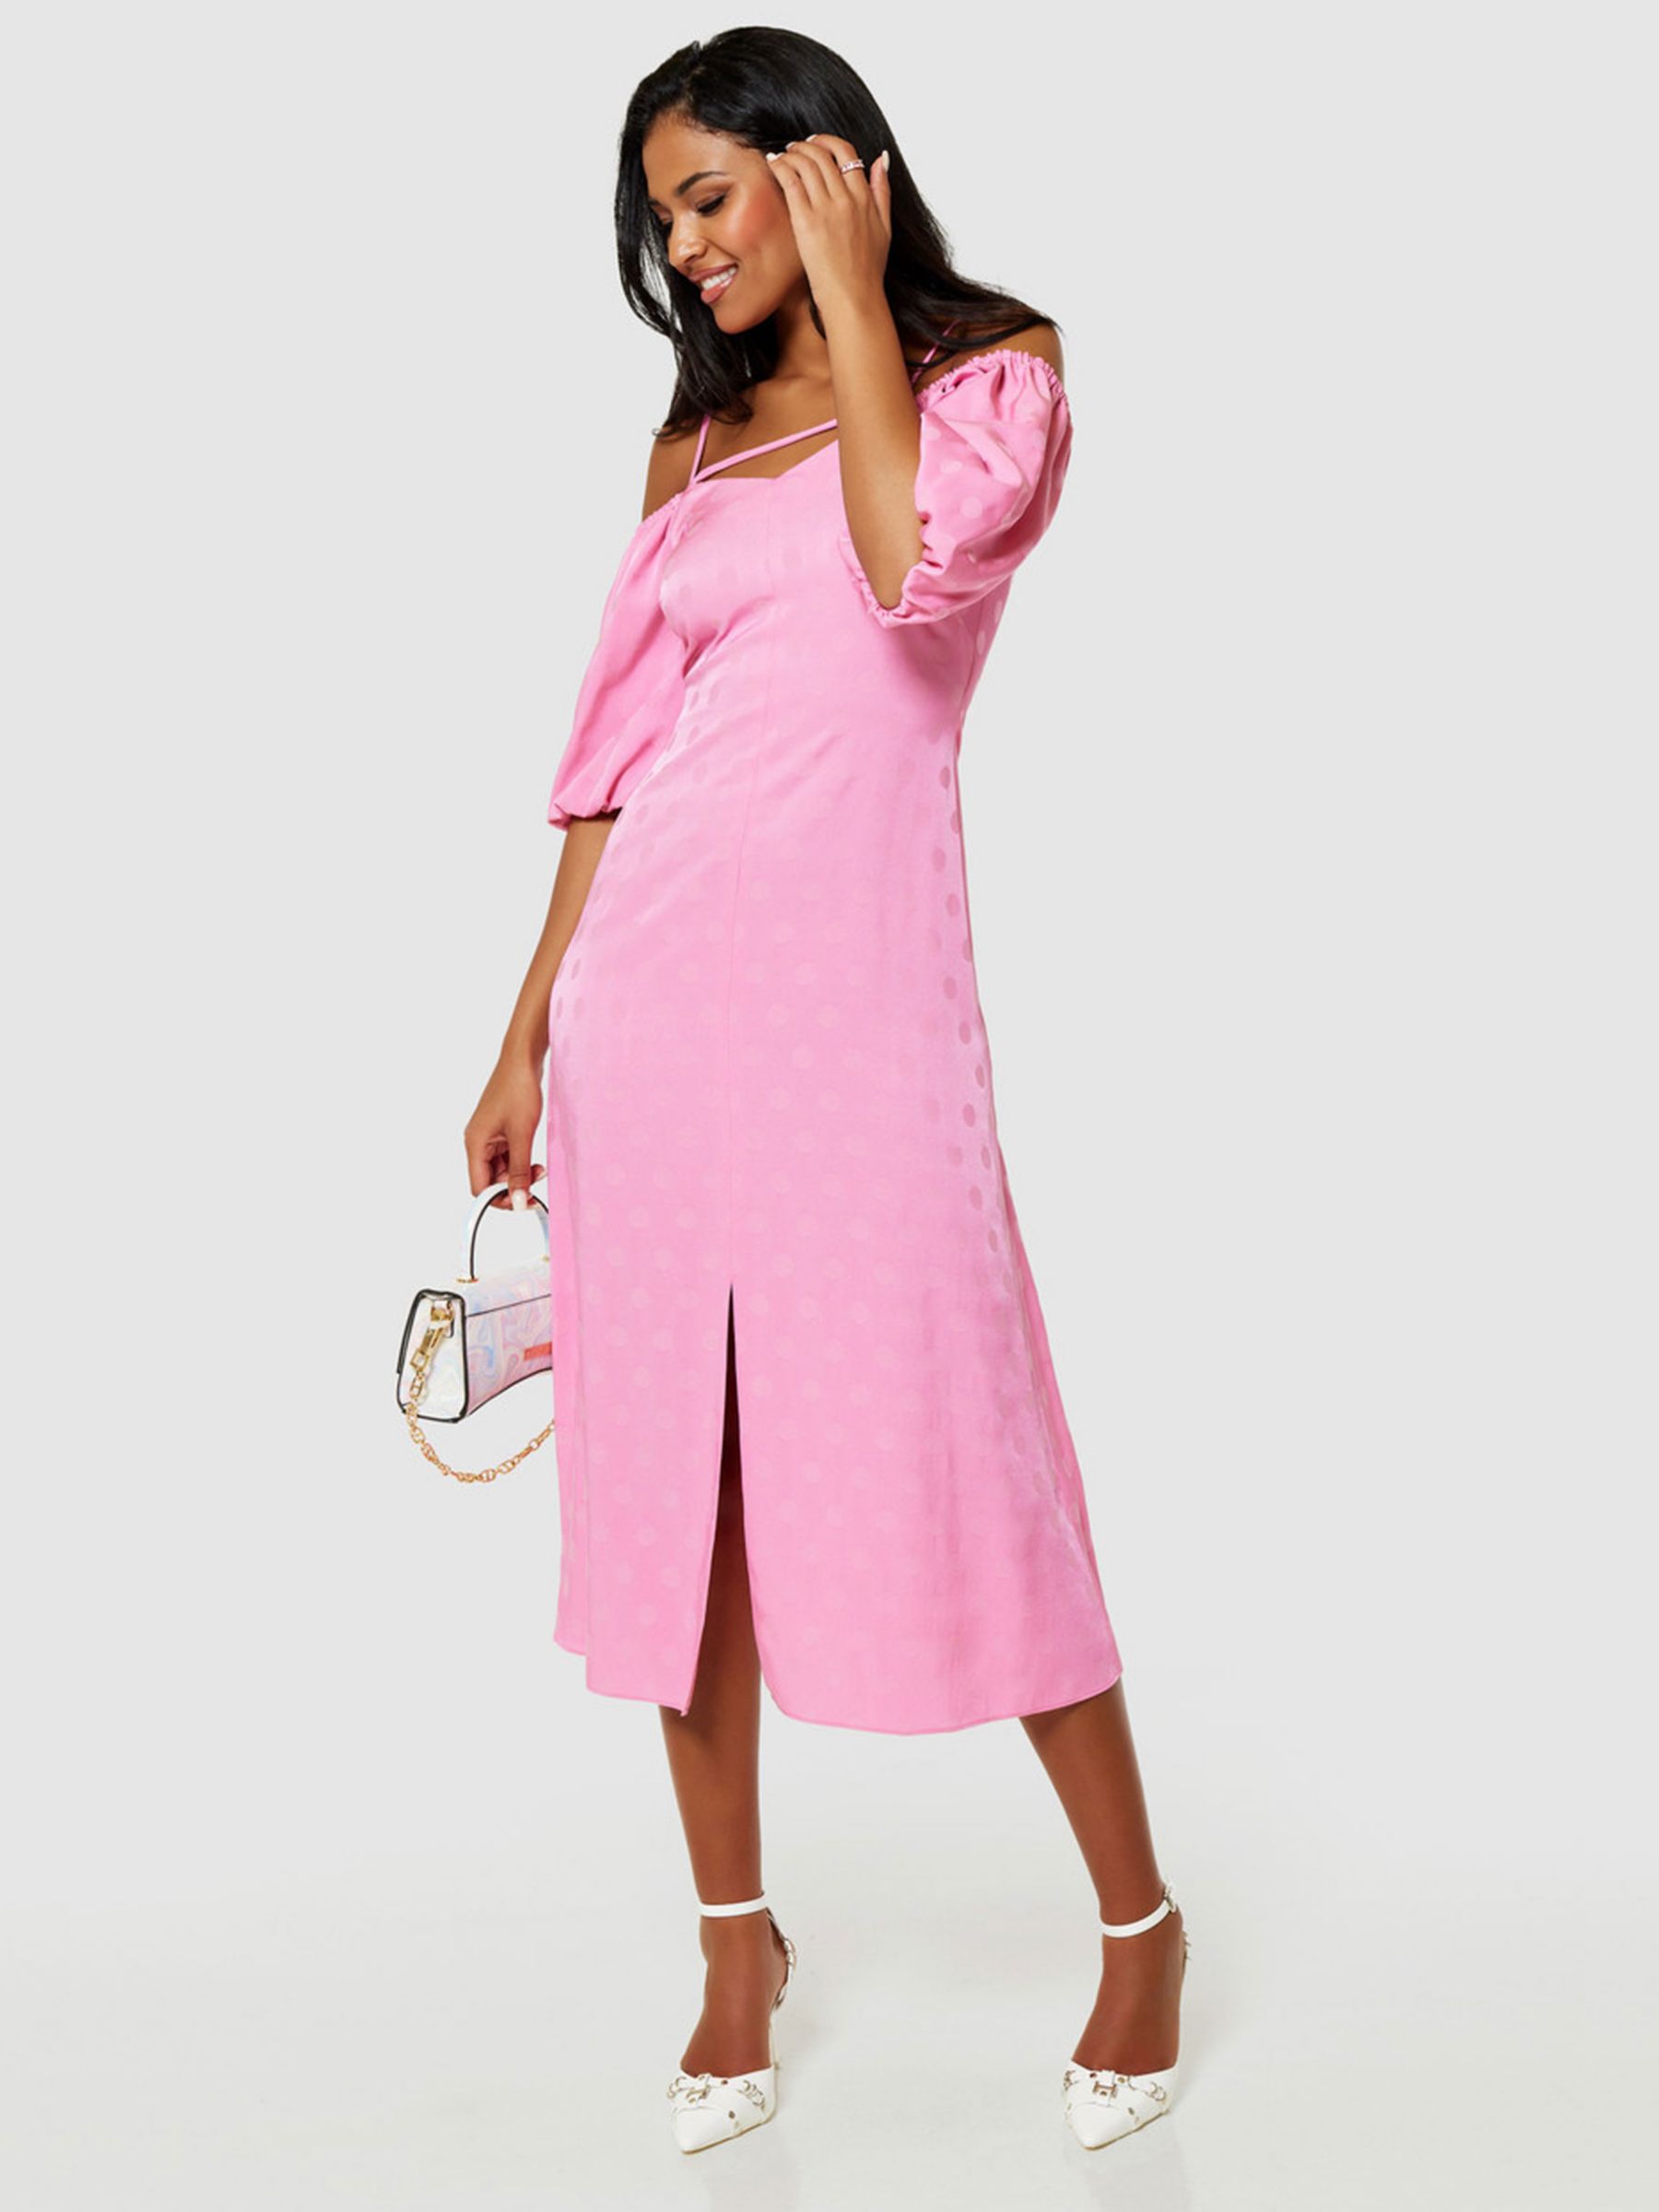 Closet London Polka Dot Jacquard A-Line Midi Dress, Pink, 16